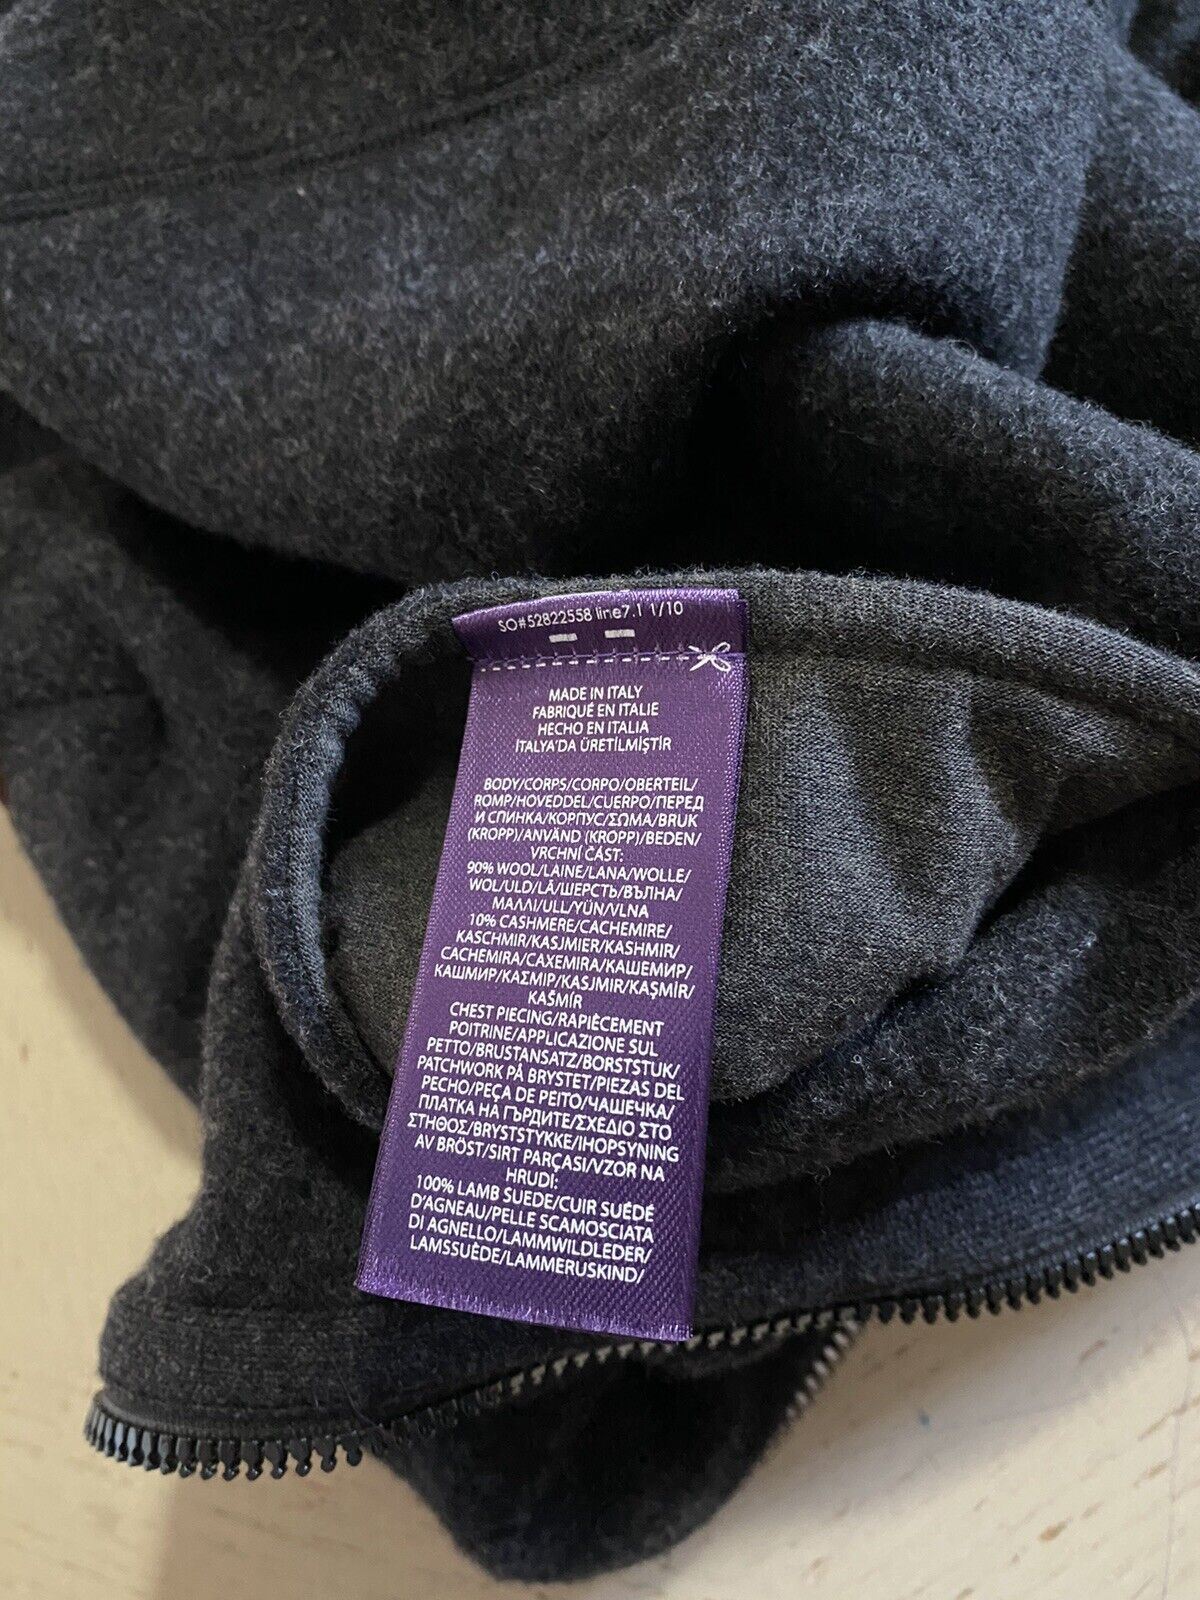 Neu $1995 Ralph Lauren Purple Label Herren Pullover Jacke Hemd DK Grau XL Italien